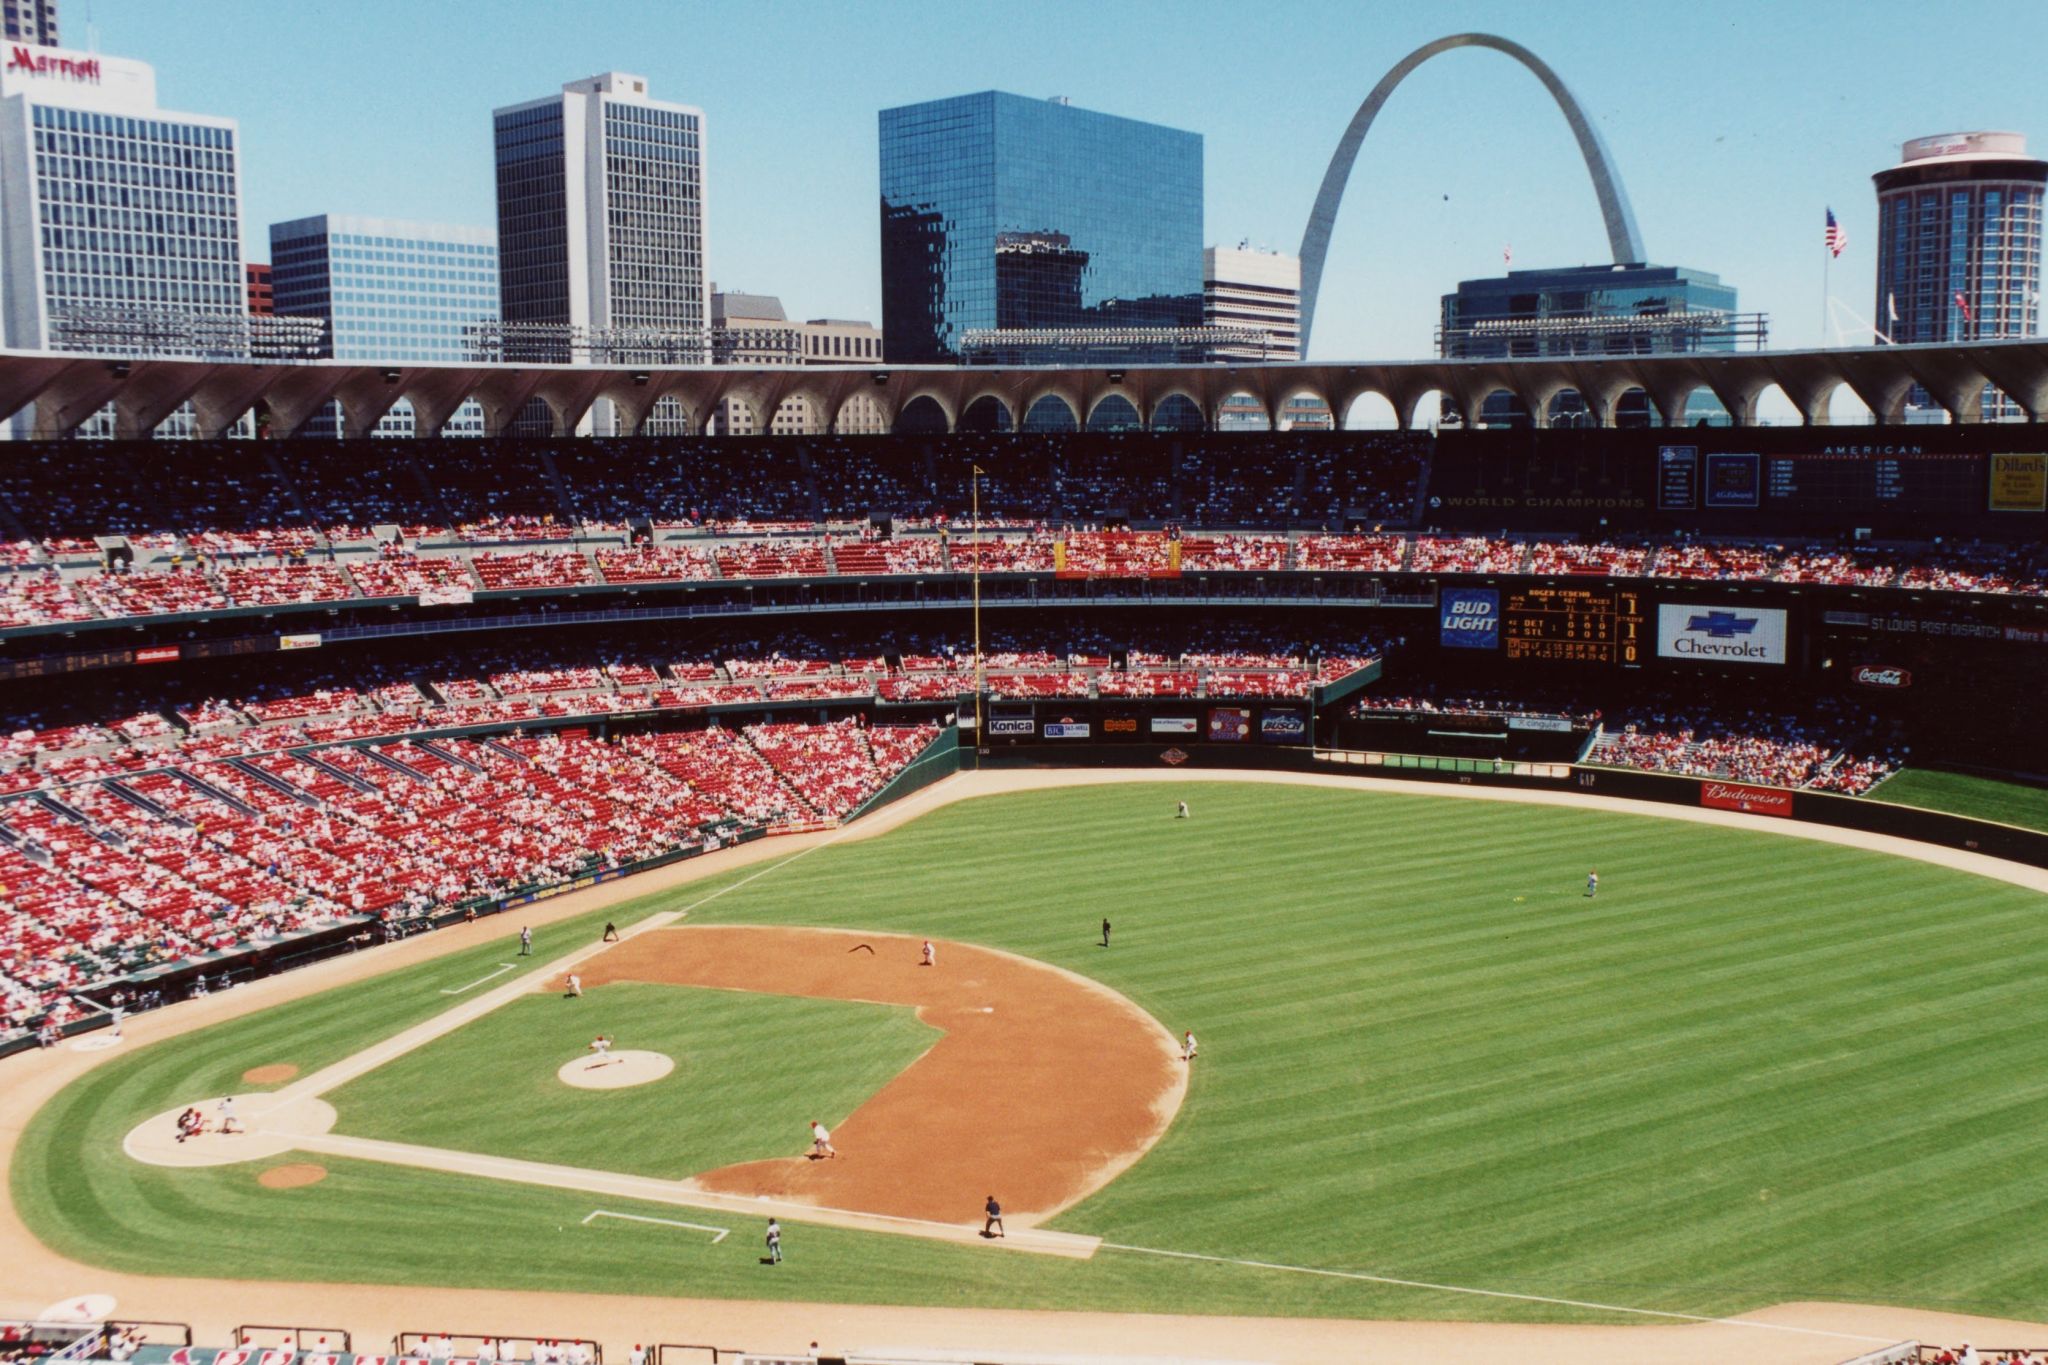 St. Louis Cardinals "Football" at Busch Memorial Stadium in St.  Louis, Missouri